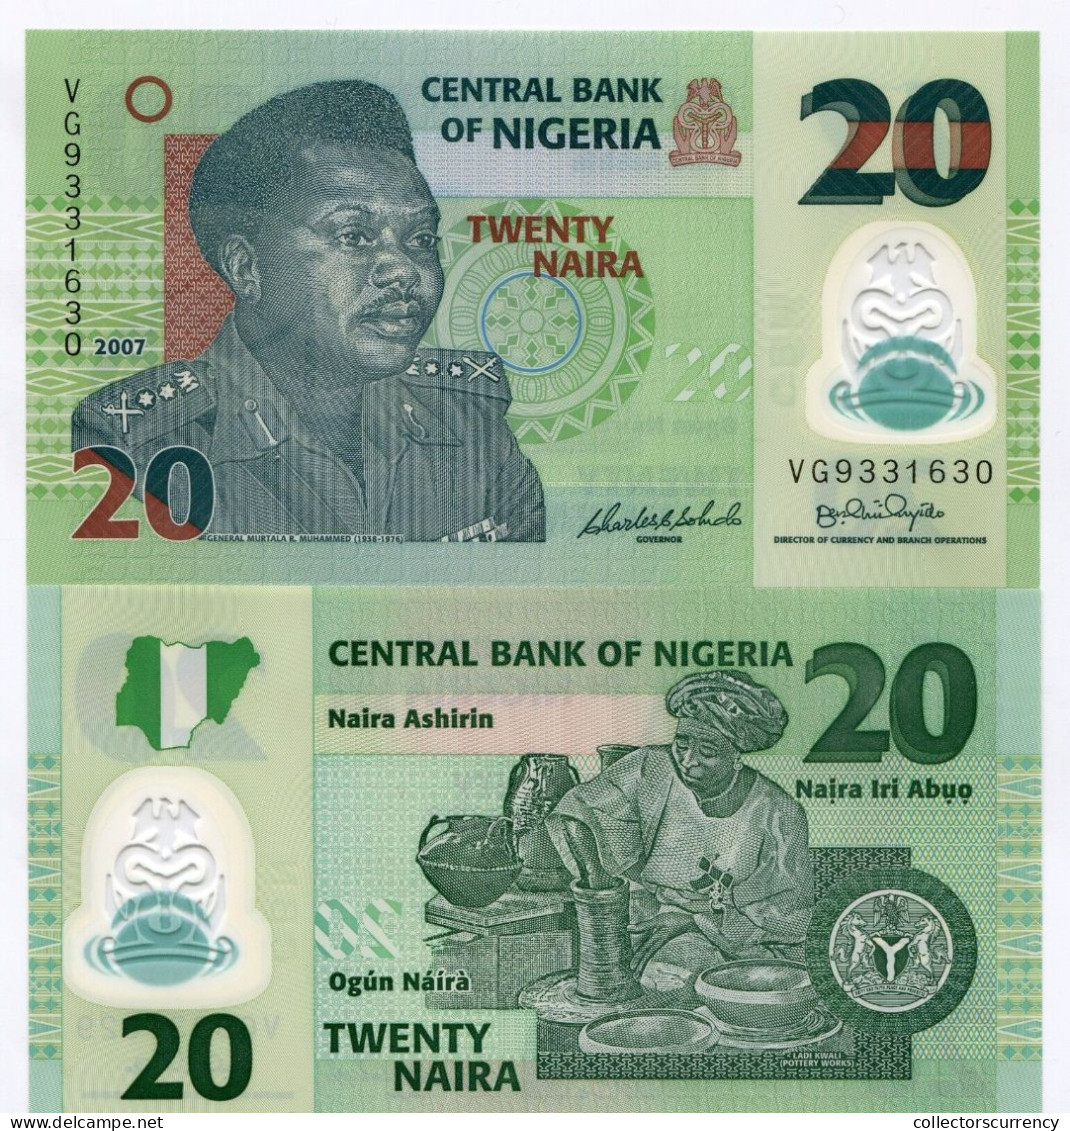 Nigeria Unc 20 Naira 2007 Polymer Money Banknote P34 X 10 Piece Lot - Nigeria